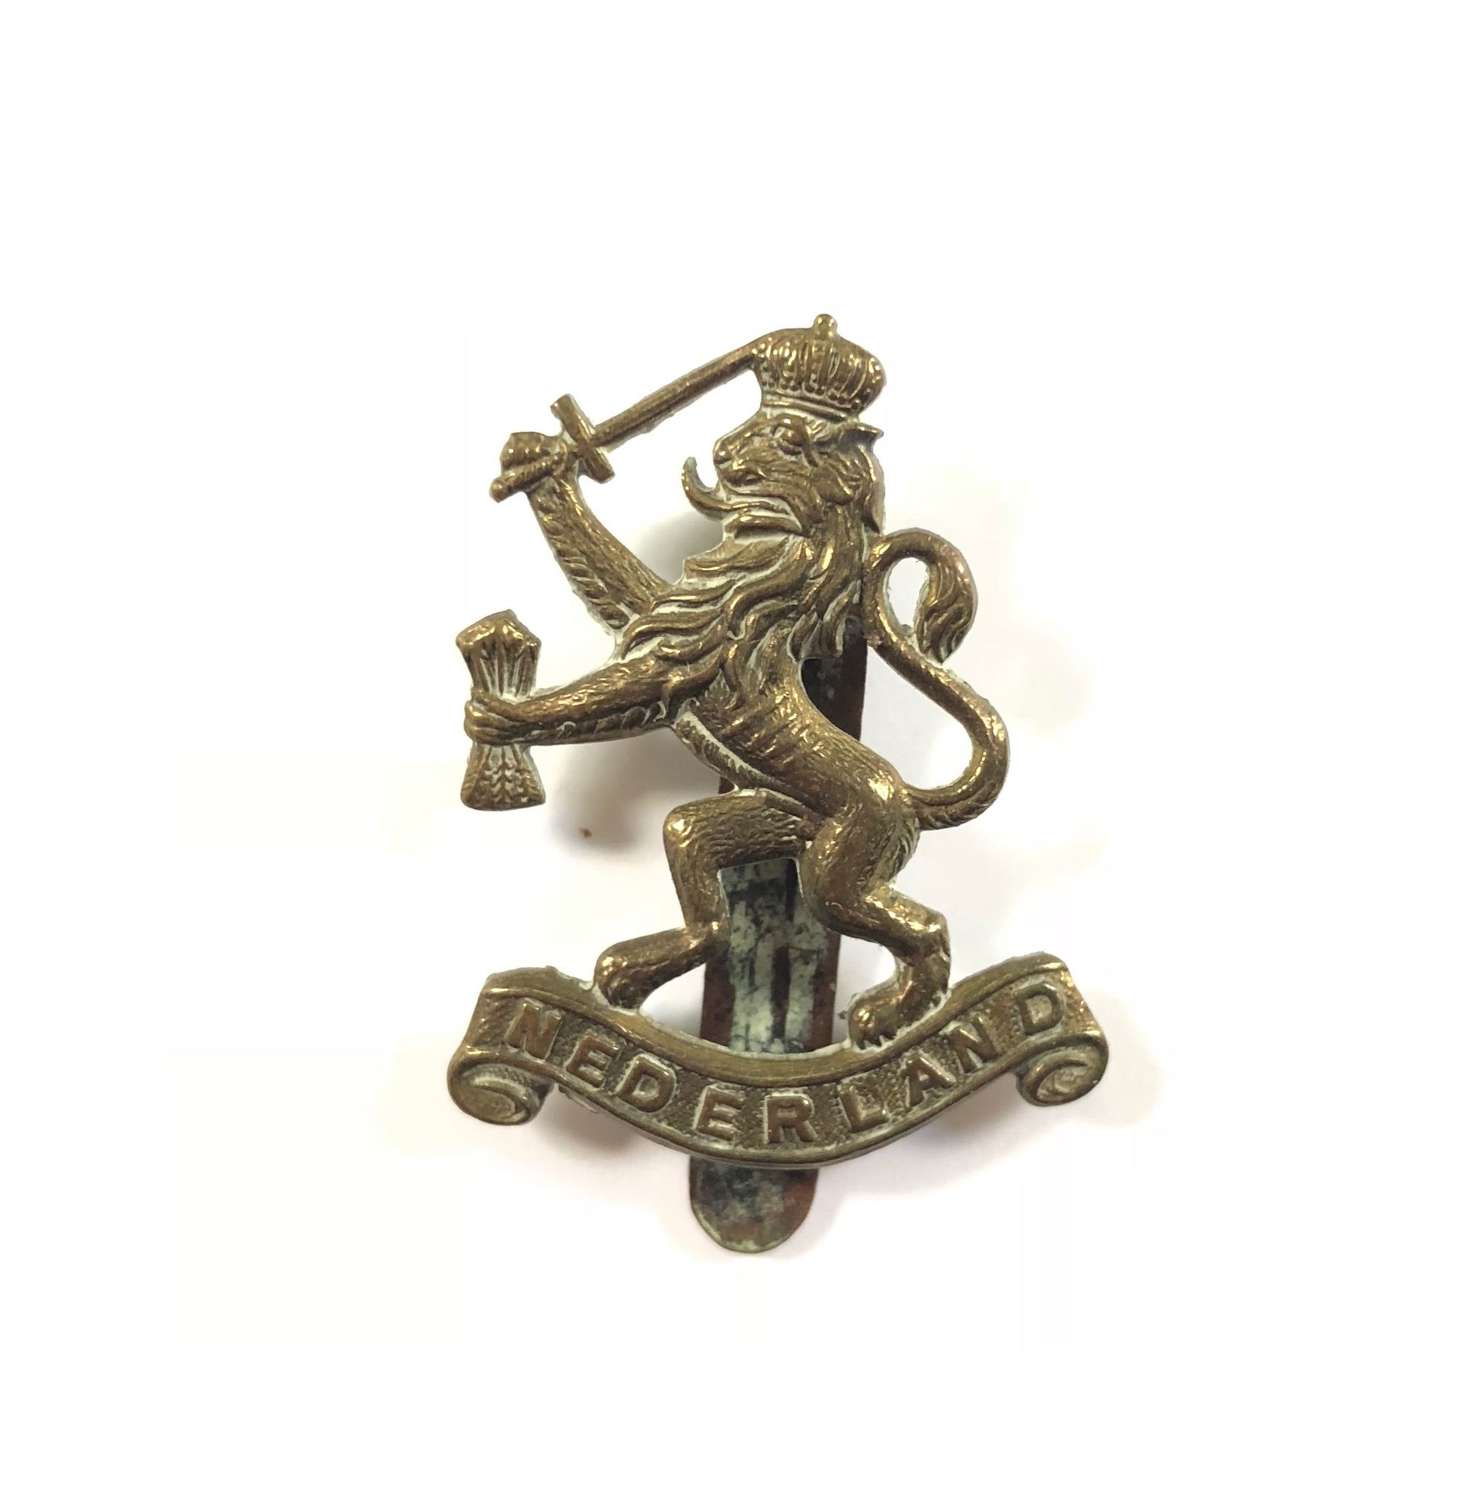 WW2 Free Dutch Forces Cap Badge.